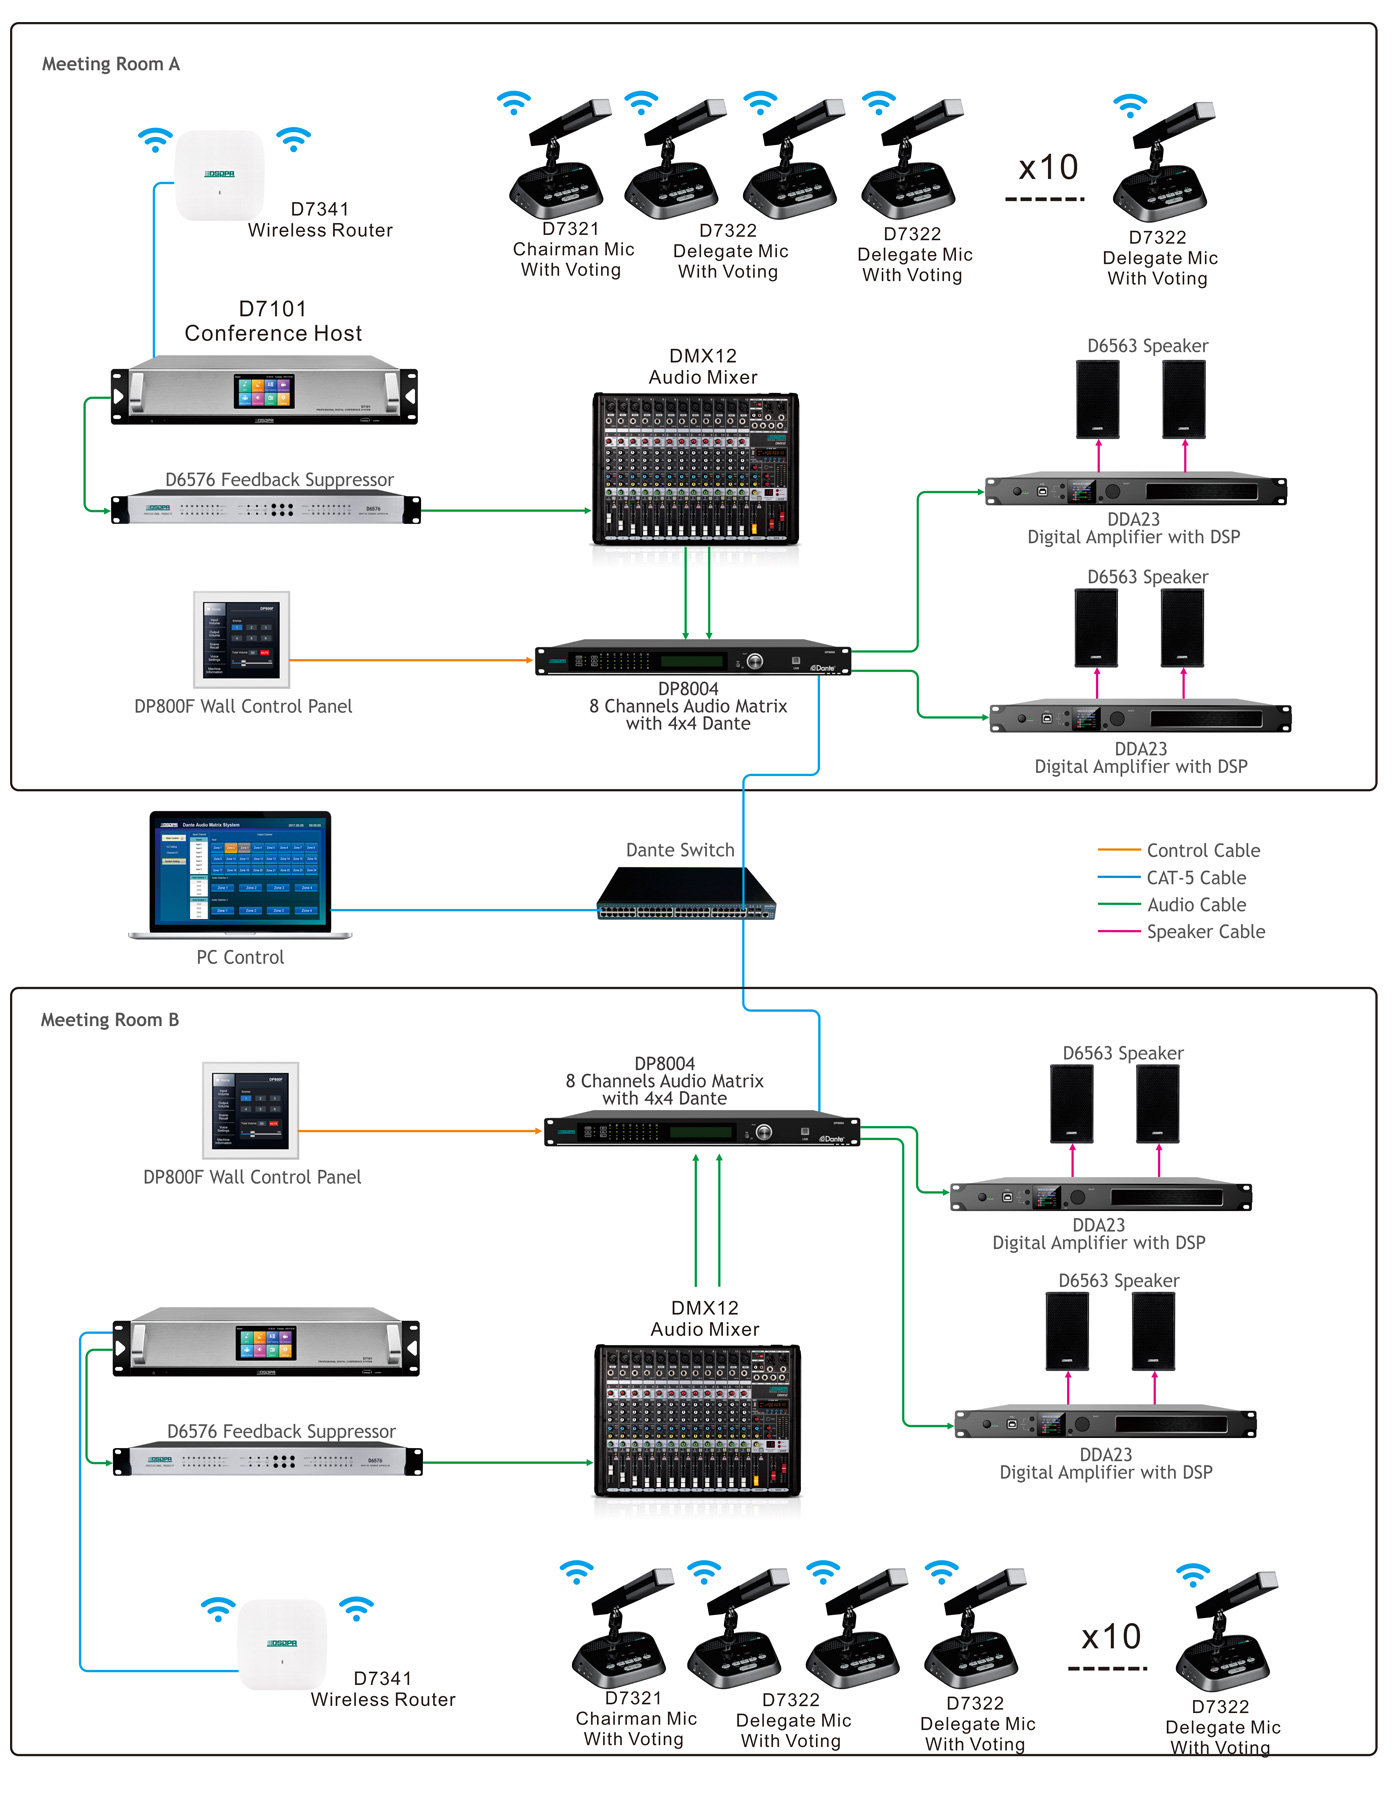 1-IP-Network-Digital-Amplifier-with-DSP.jpg